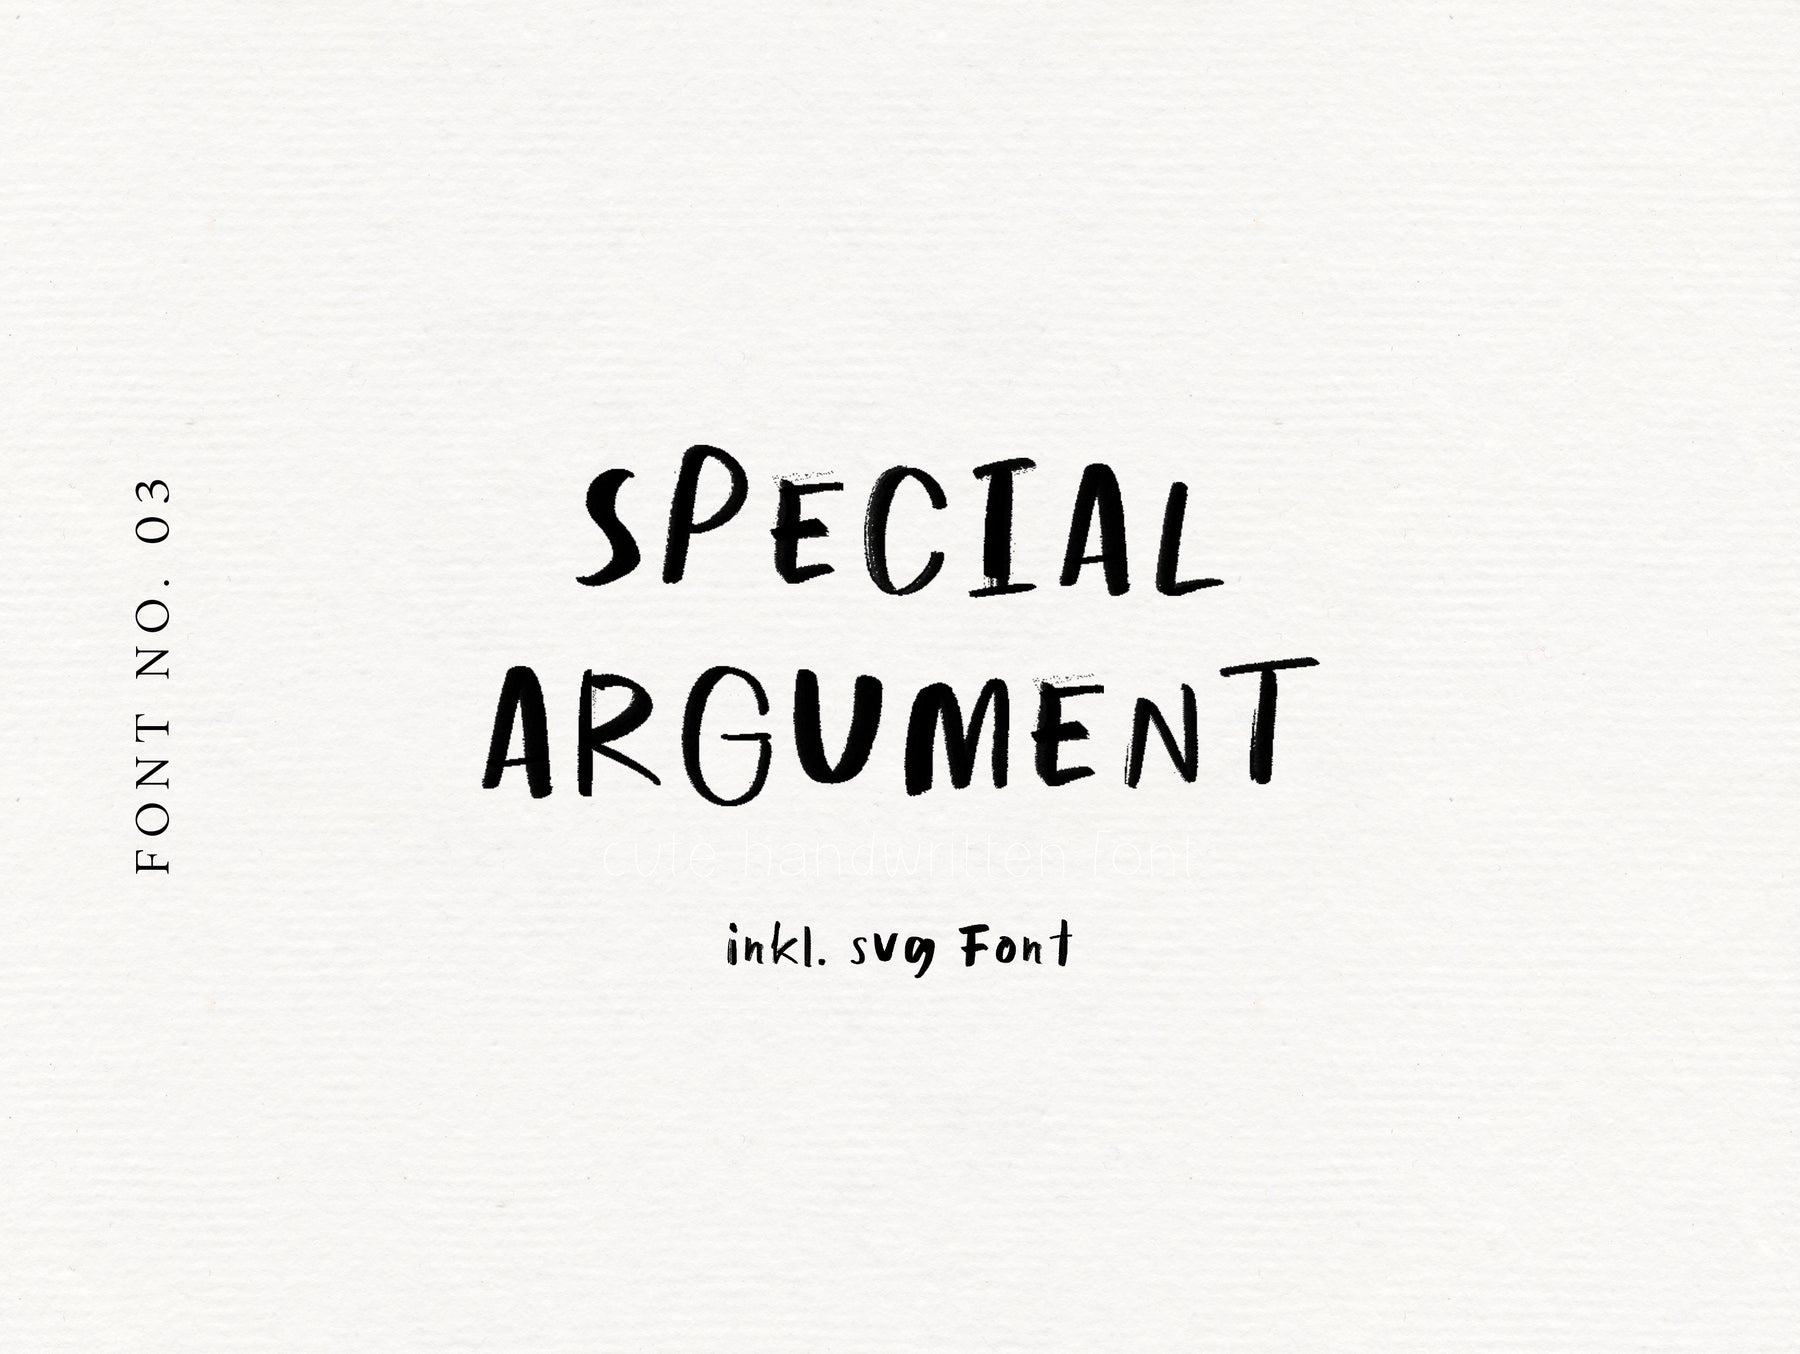 Font "Special Argument" handwritten